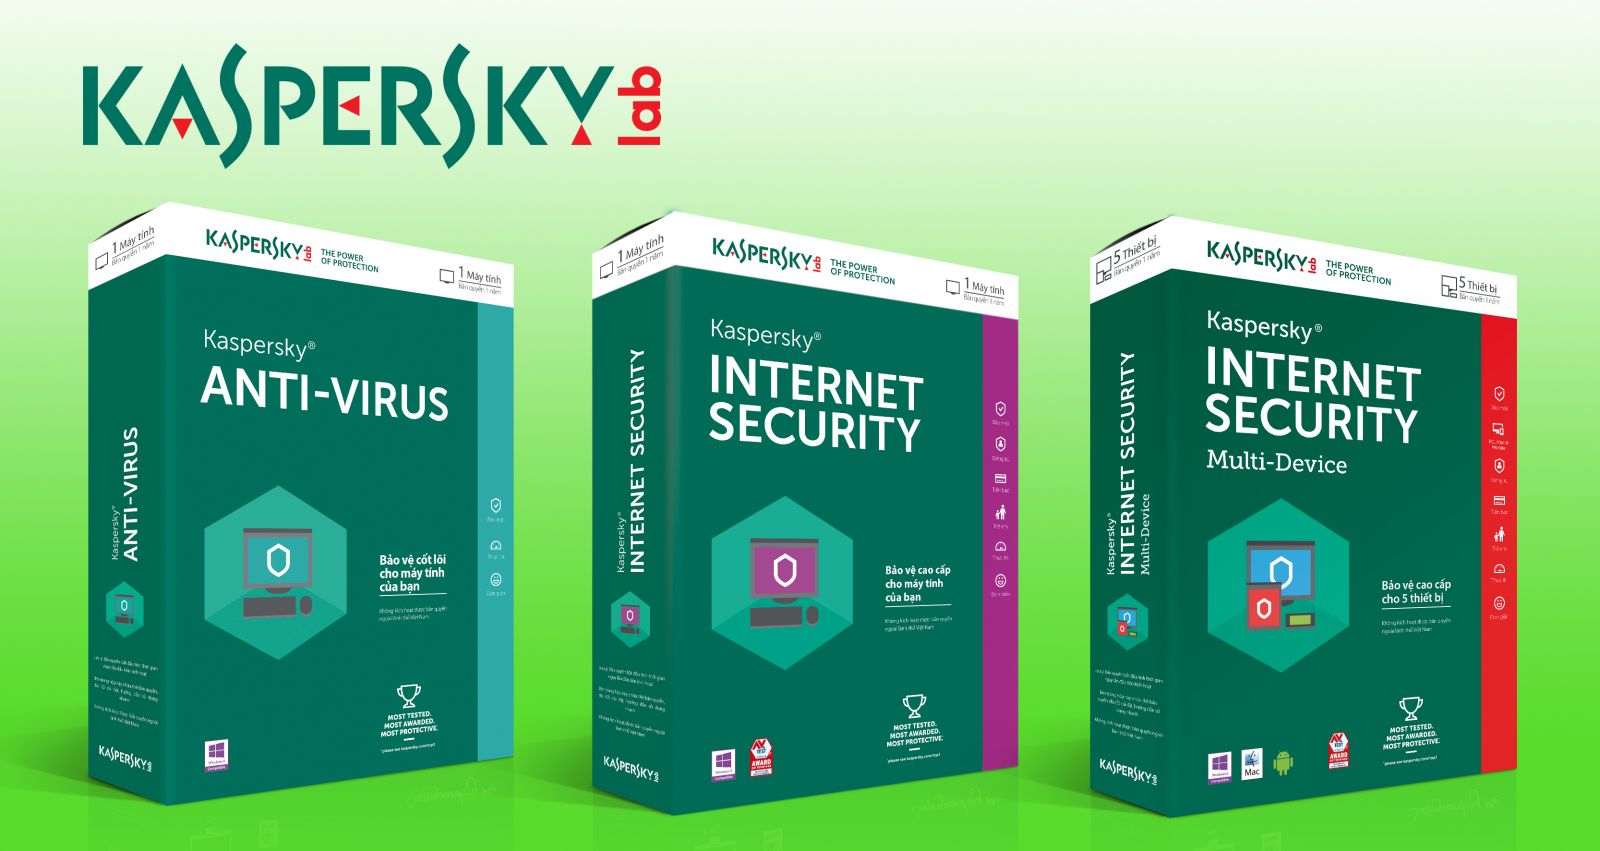 Kaspersky base. Коробка Kaspersky Anti-virus Base Box 2 DVD. Kaspersky Antivirus коробка. Интернет секьюрити. Касперский 2011 коробка.